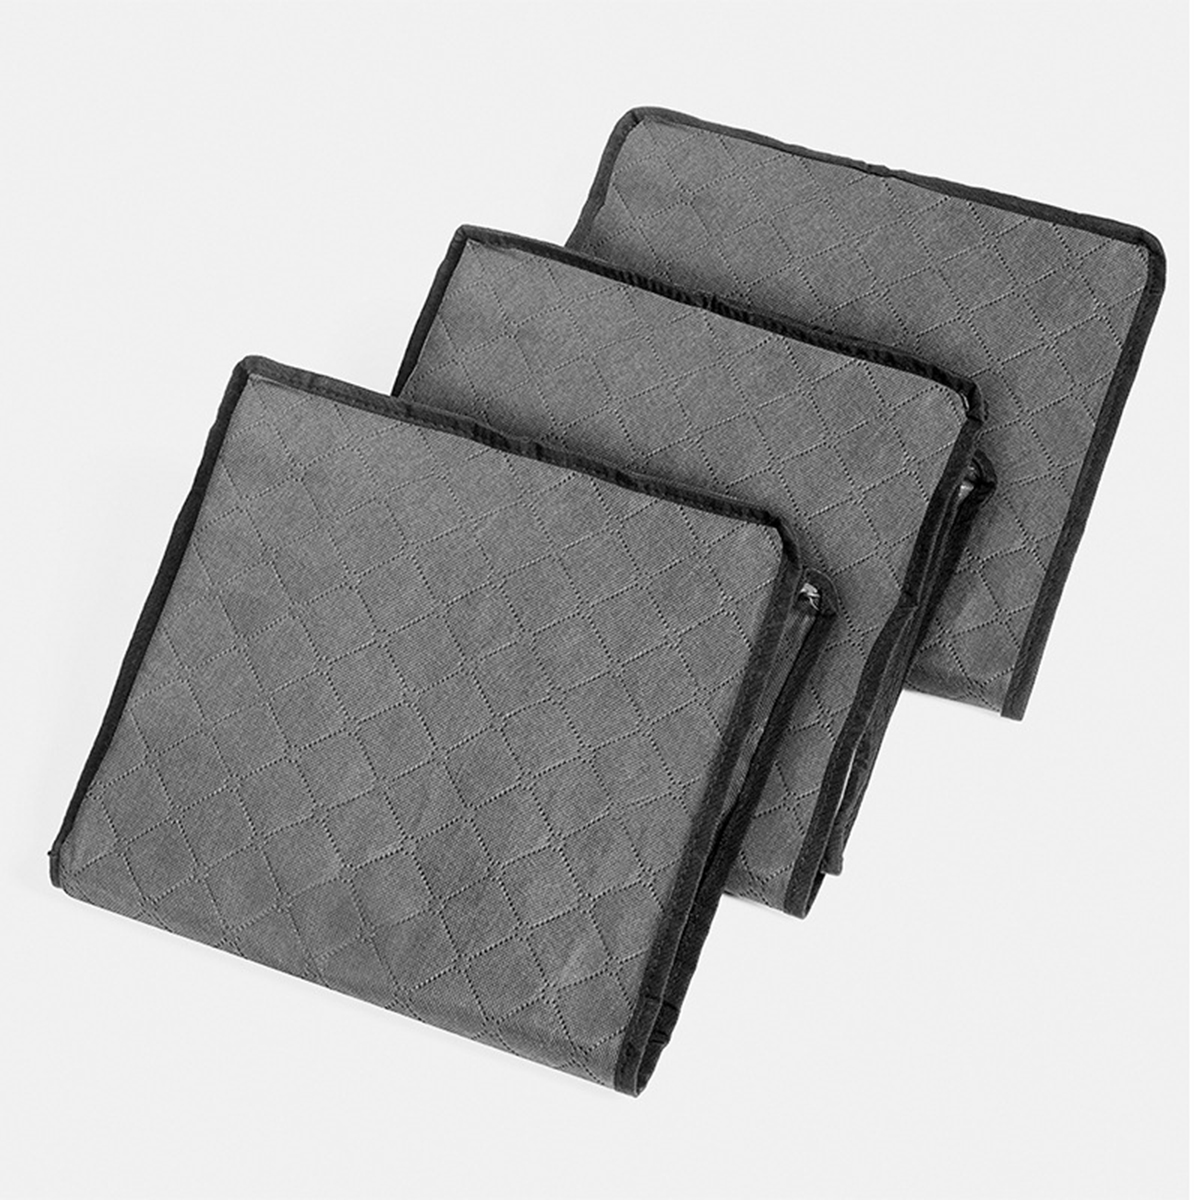 1-Pcs-Clothes-Storage-Bag-Foldable-Zipper-Organizer-Pillows-Quilt-Bedding-Bag-Luggage-Bag-1653003-4